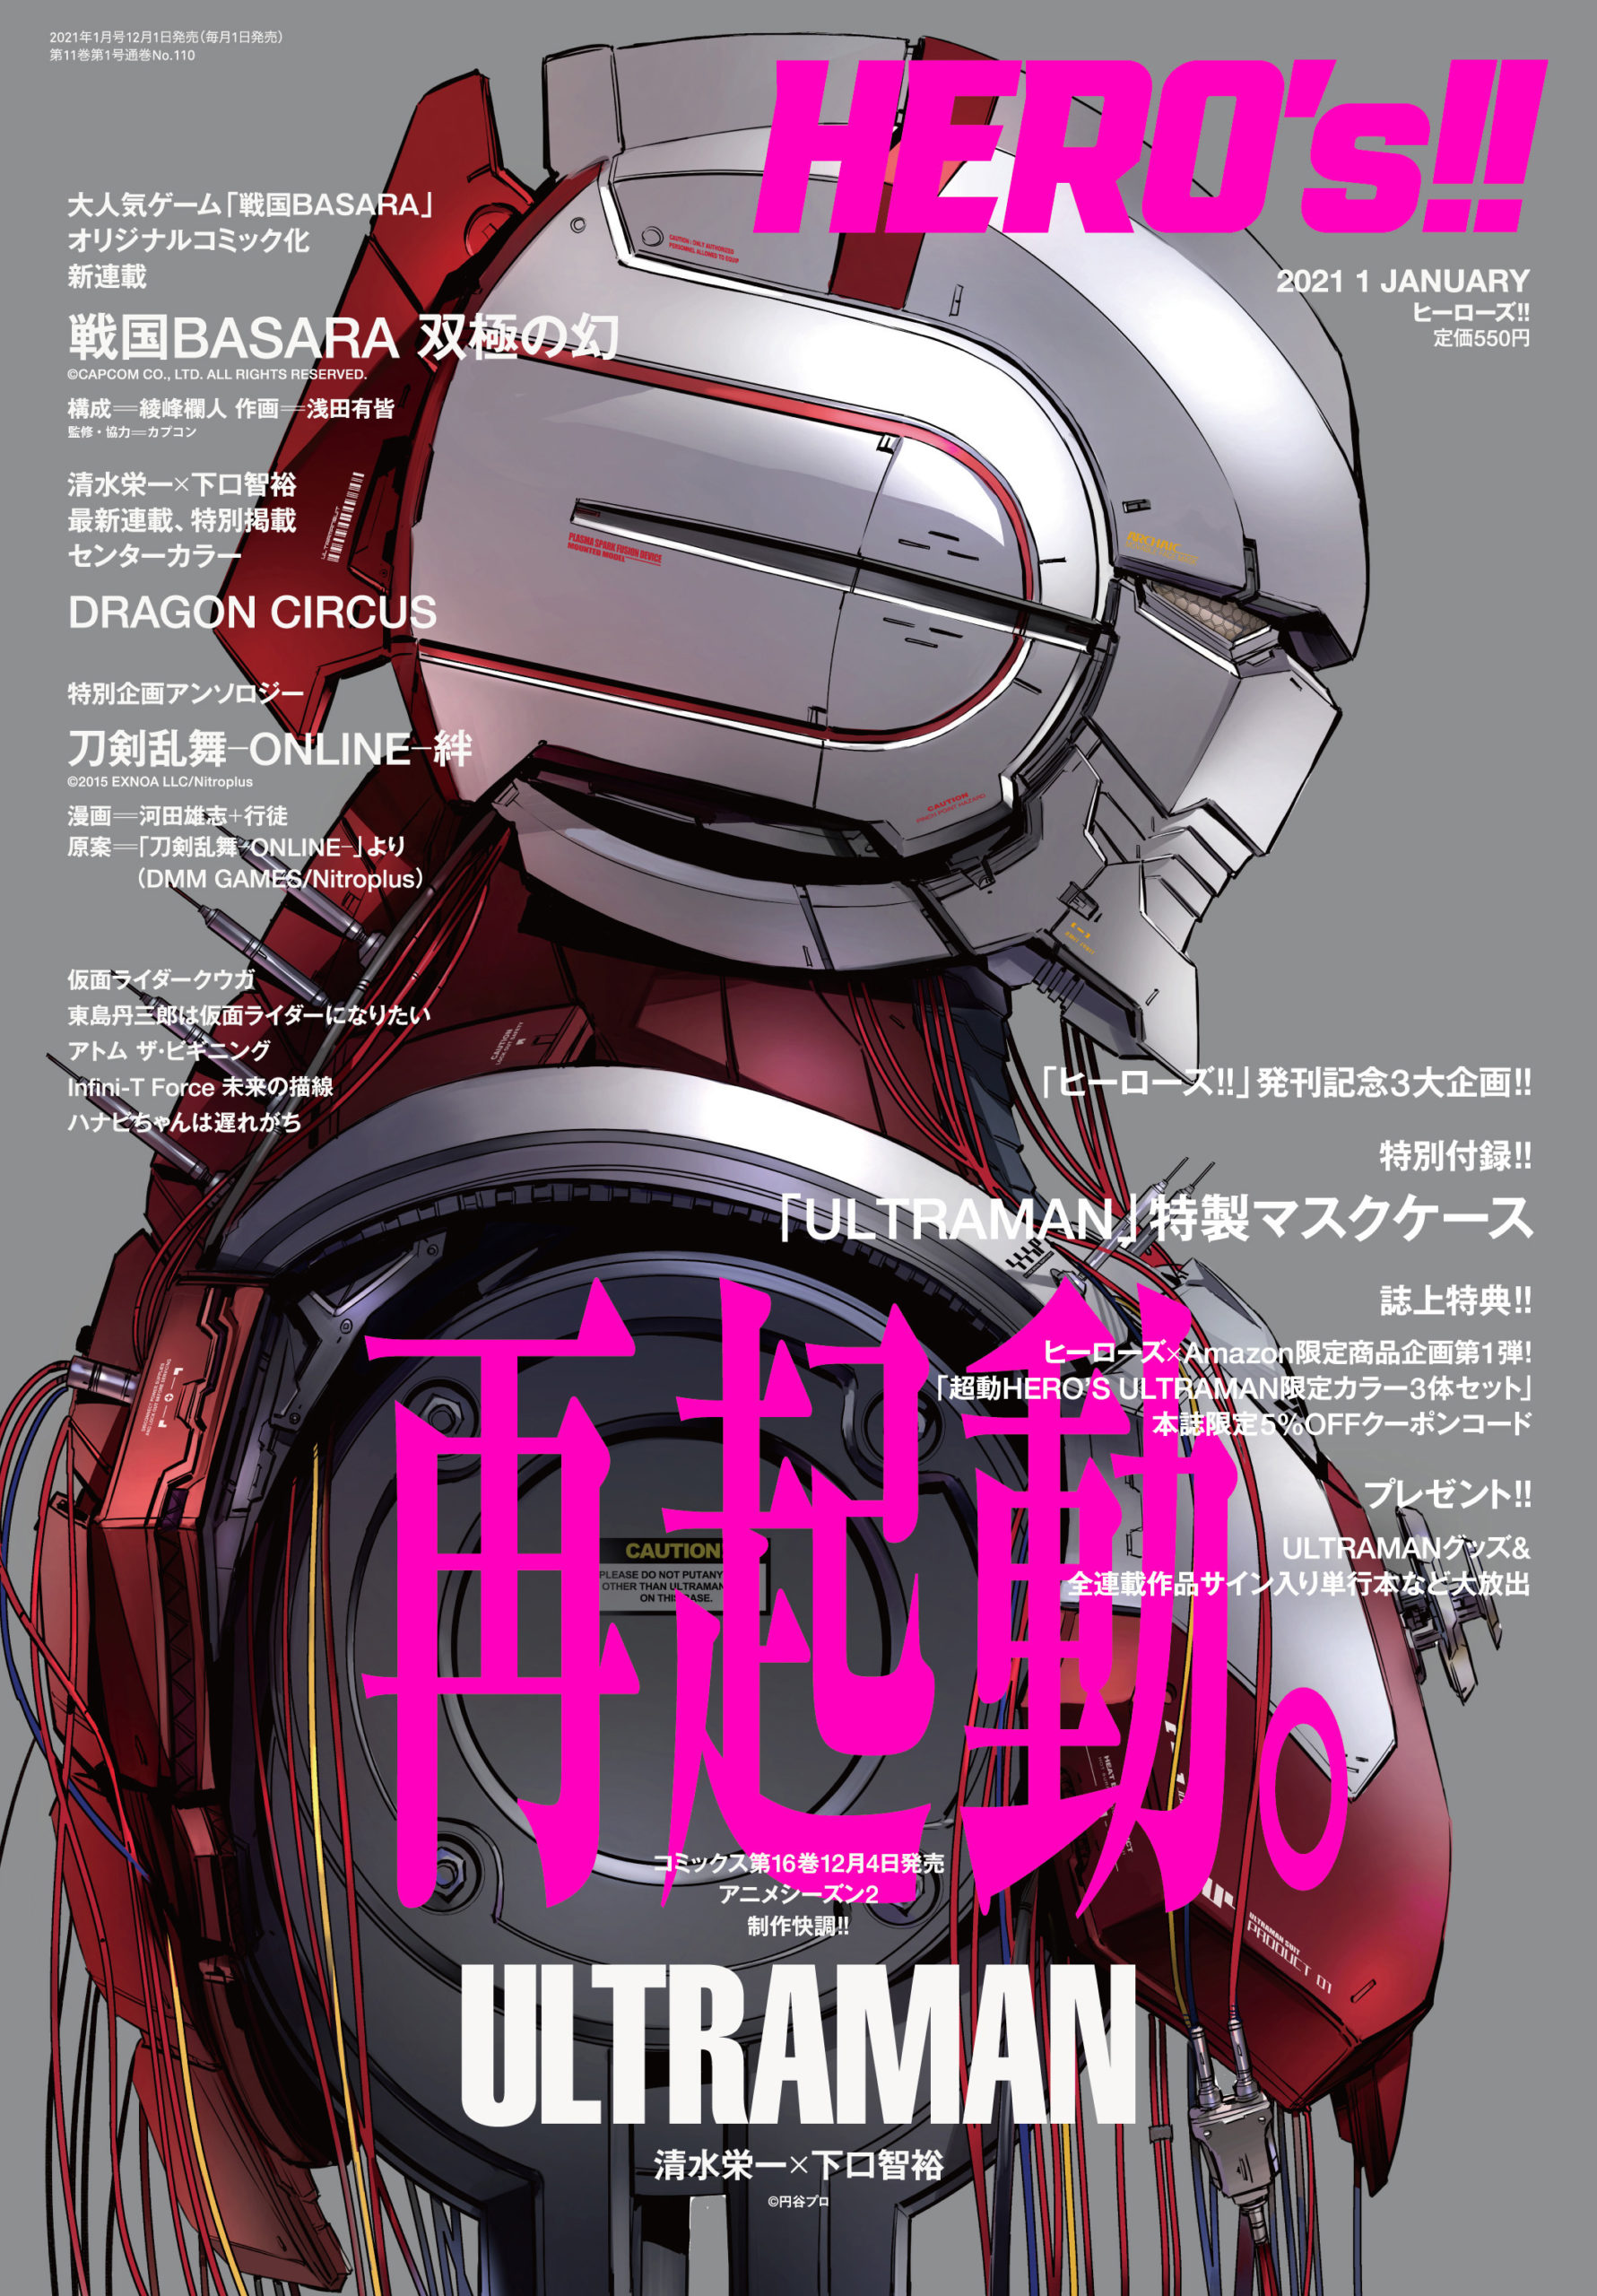 Ultraman 最新コミック16巻 外伝小説tiga編が年12月に発売 円谷ステーション